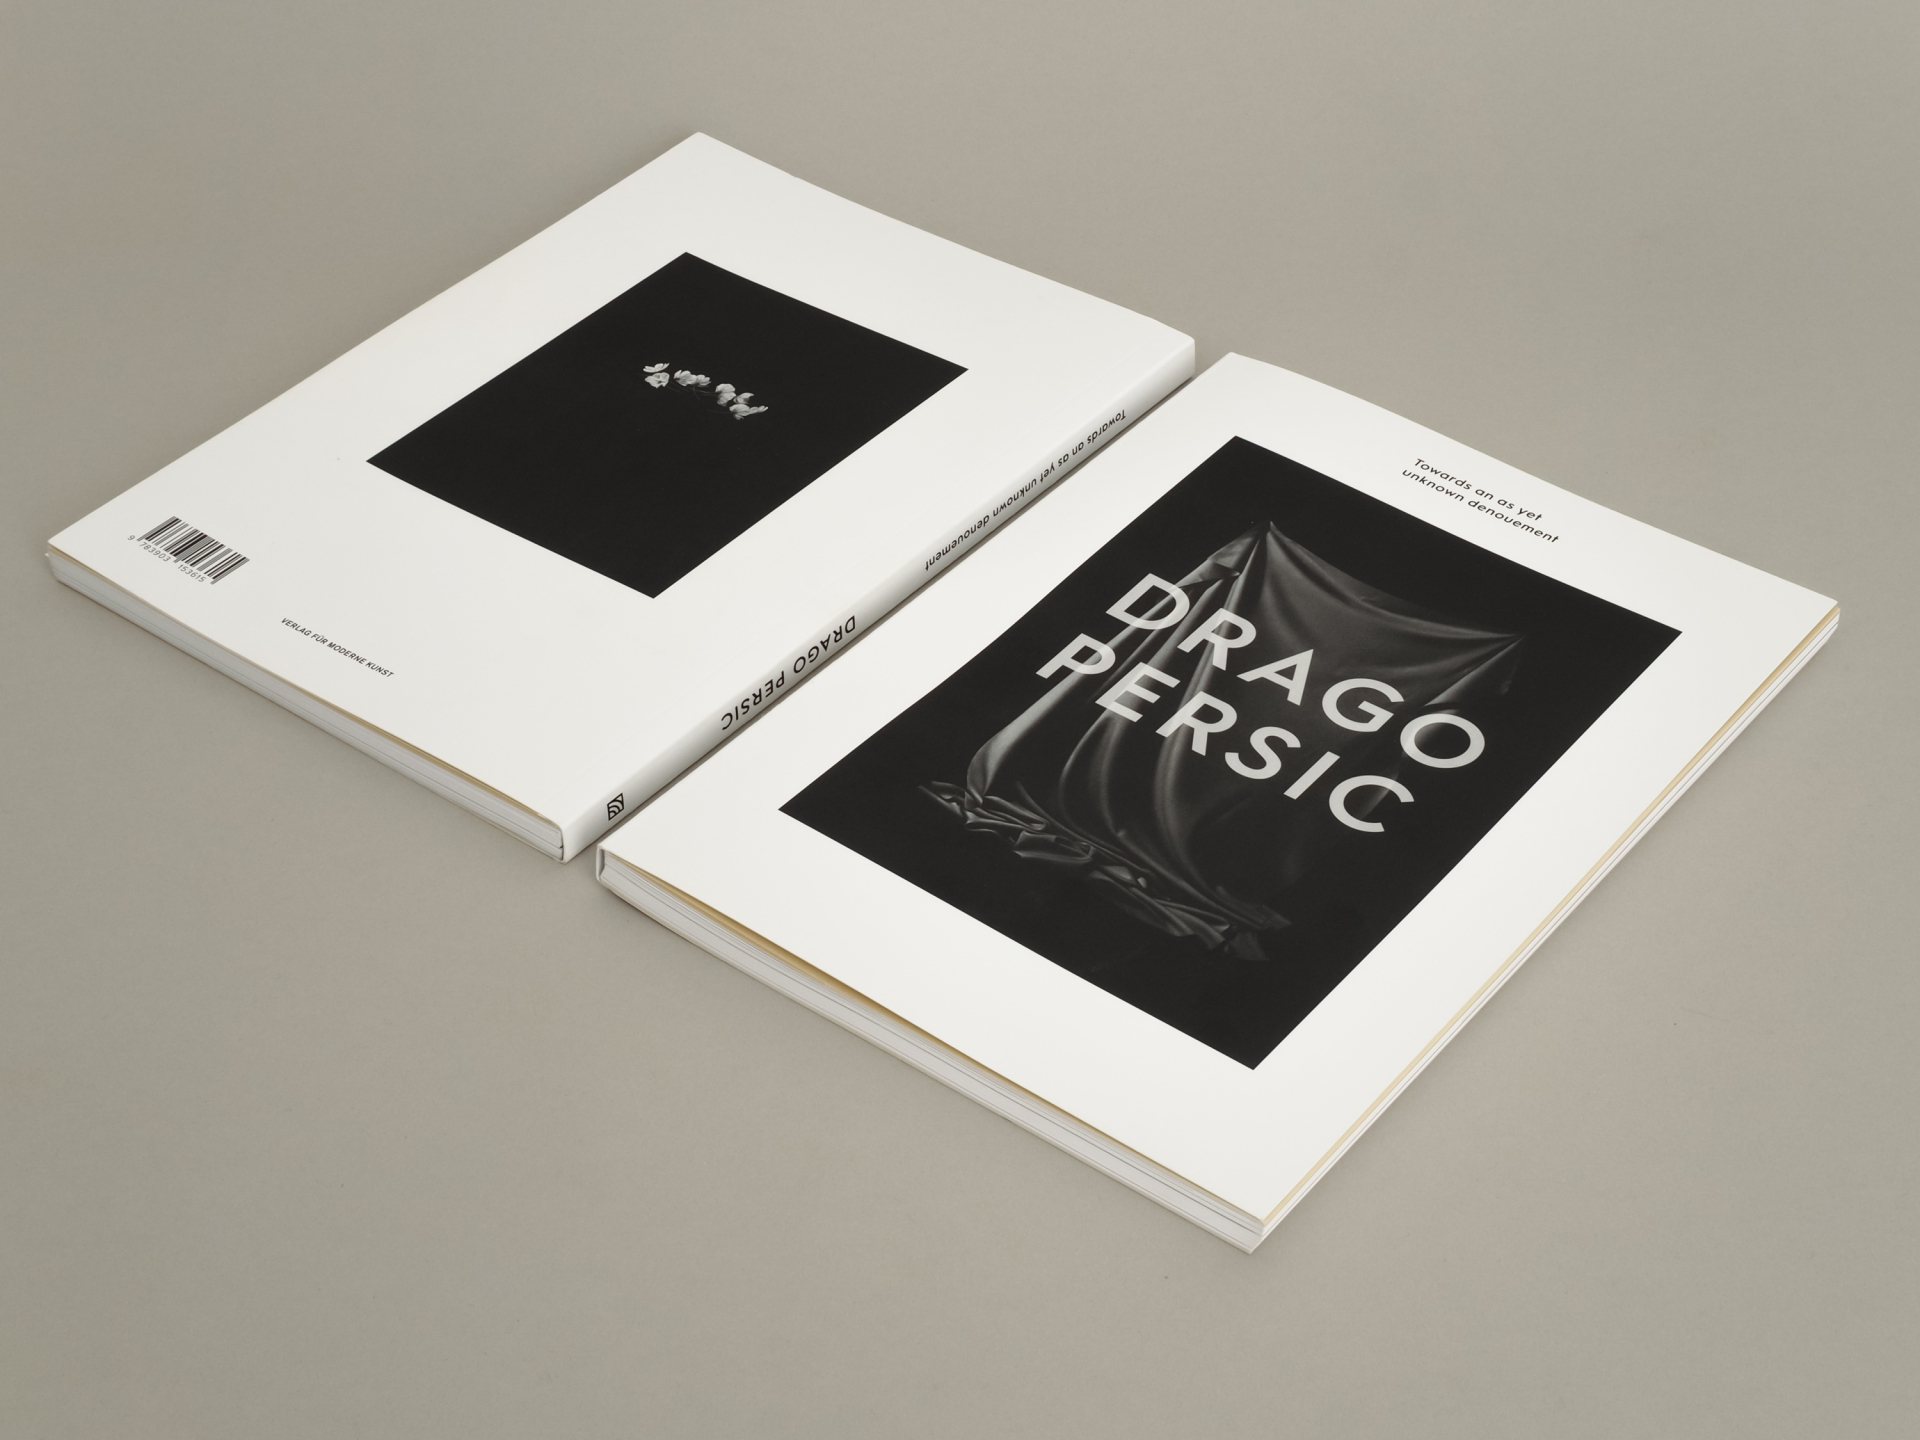 Grafikum Drago Persic artist catalogue